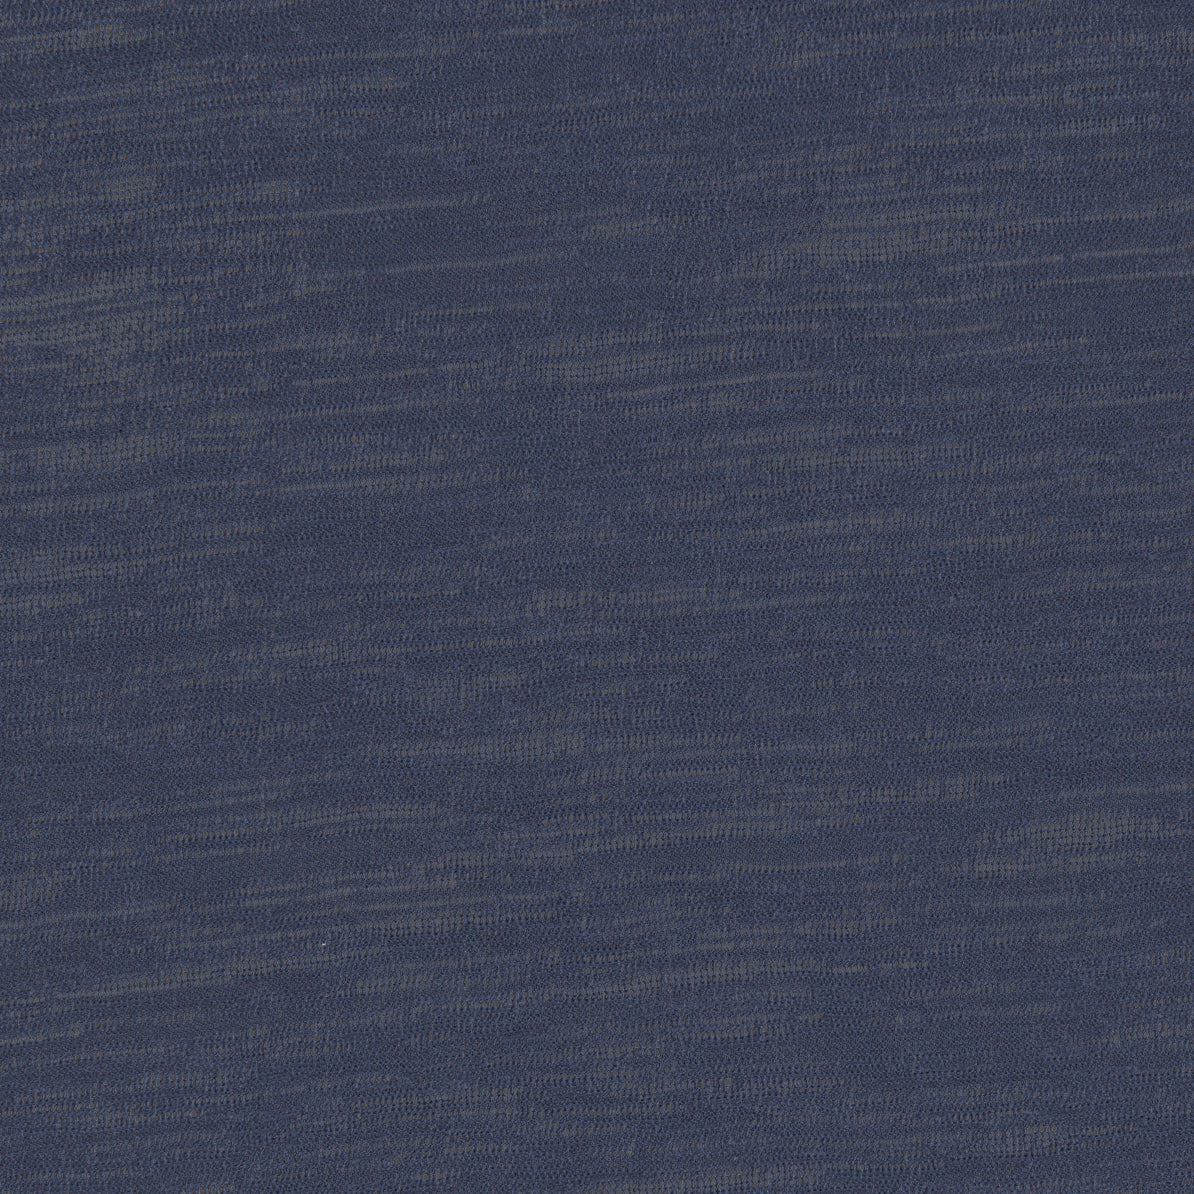 15011-09 Dark Ash Blue Polyester Plain Dyed 100% 58&quot; 95g/yd blue knit plain dyed polyester Solid Color - knit fabric - woven fabric - fabric company - fabric wholesale - fabric b2b - fabric factory - high quality fabric - hong kong fabric - fabric hk - acetate fabric - cotton fabric - linen fabric - metallic fabric - nylon fabric - polyester fabric - spandex fabric - chun wing hing - cwh hk - fabric worldwide ship - 針織布 - 梳織布 - 布料公司- 布料批發 - 香港布料 - 秦榮興